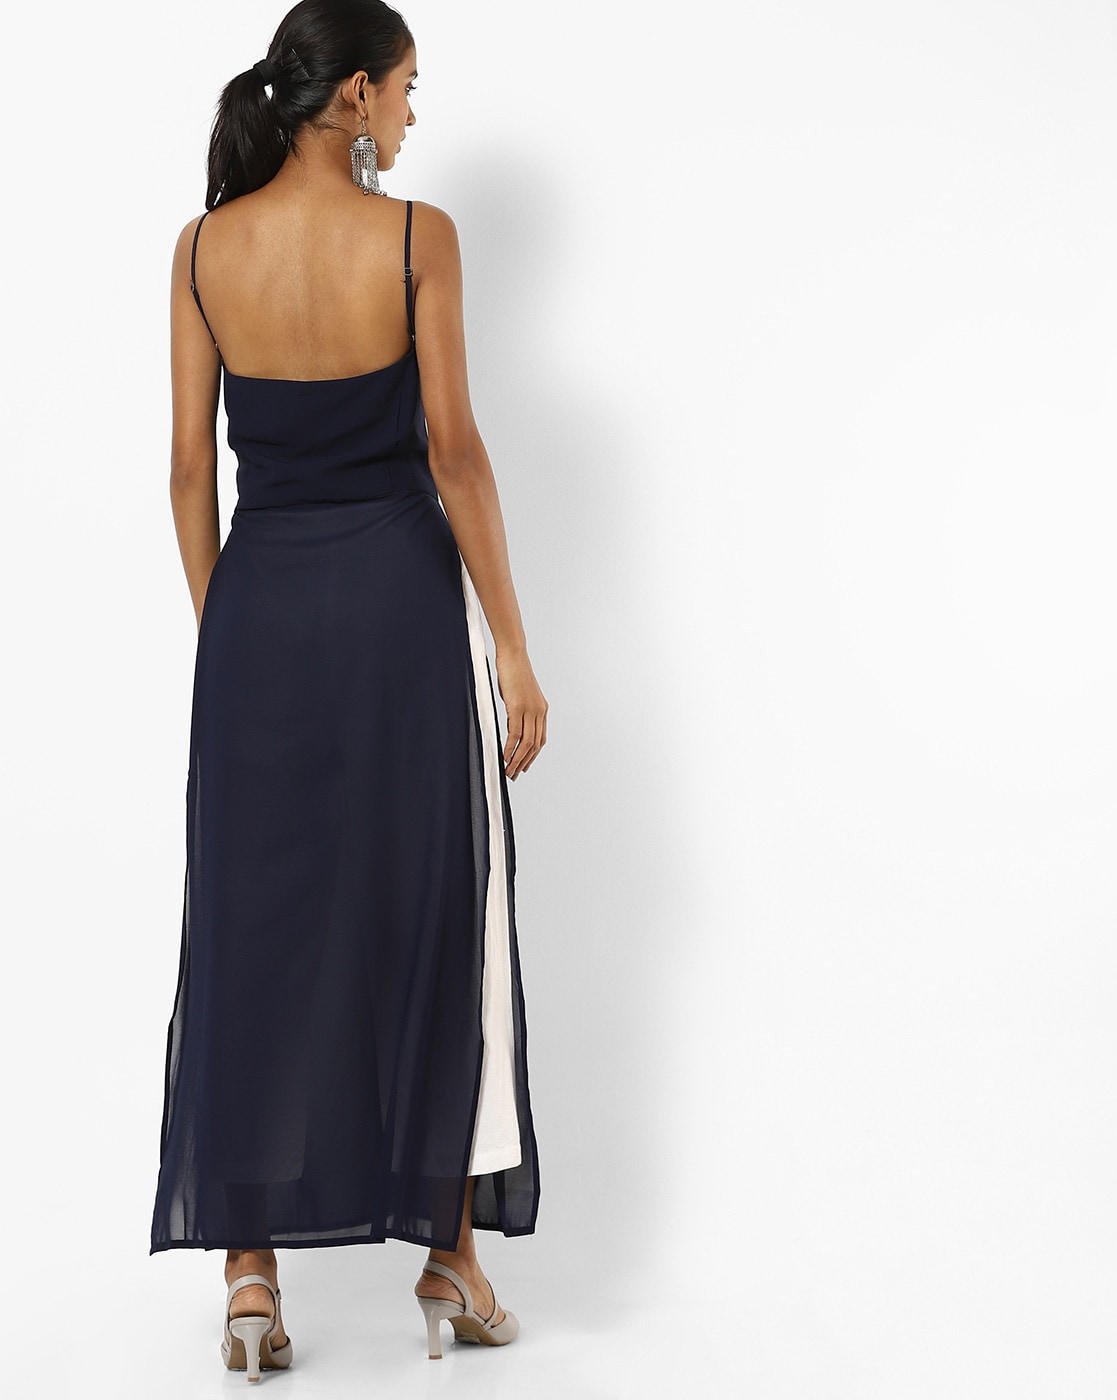 Buy BISHUIGE Women L-4XL Plus Size Maxi Dresses Long Dress 2X-Large, Royal  Blue at Amazon.in